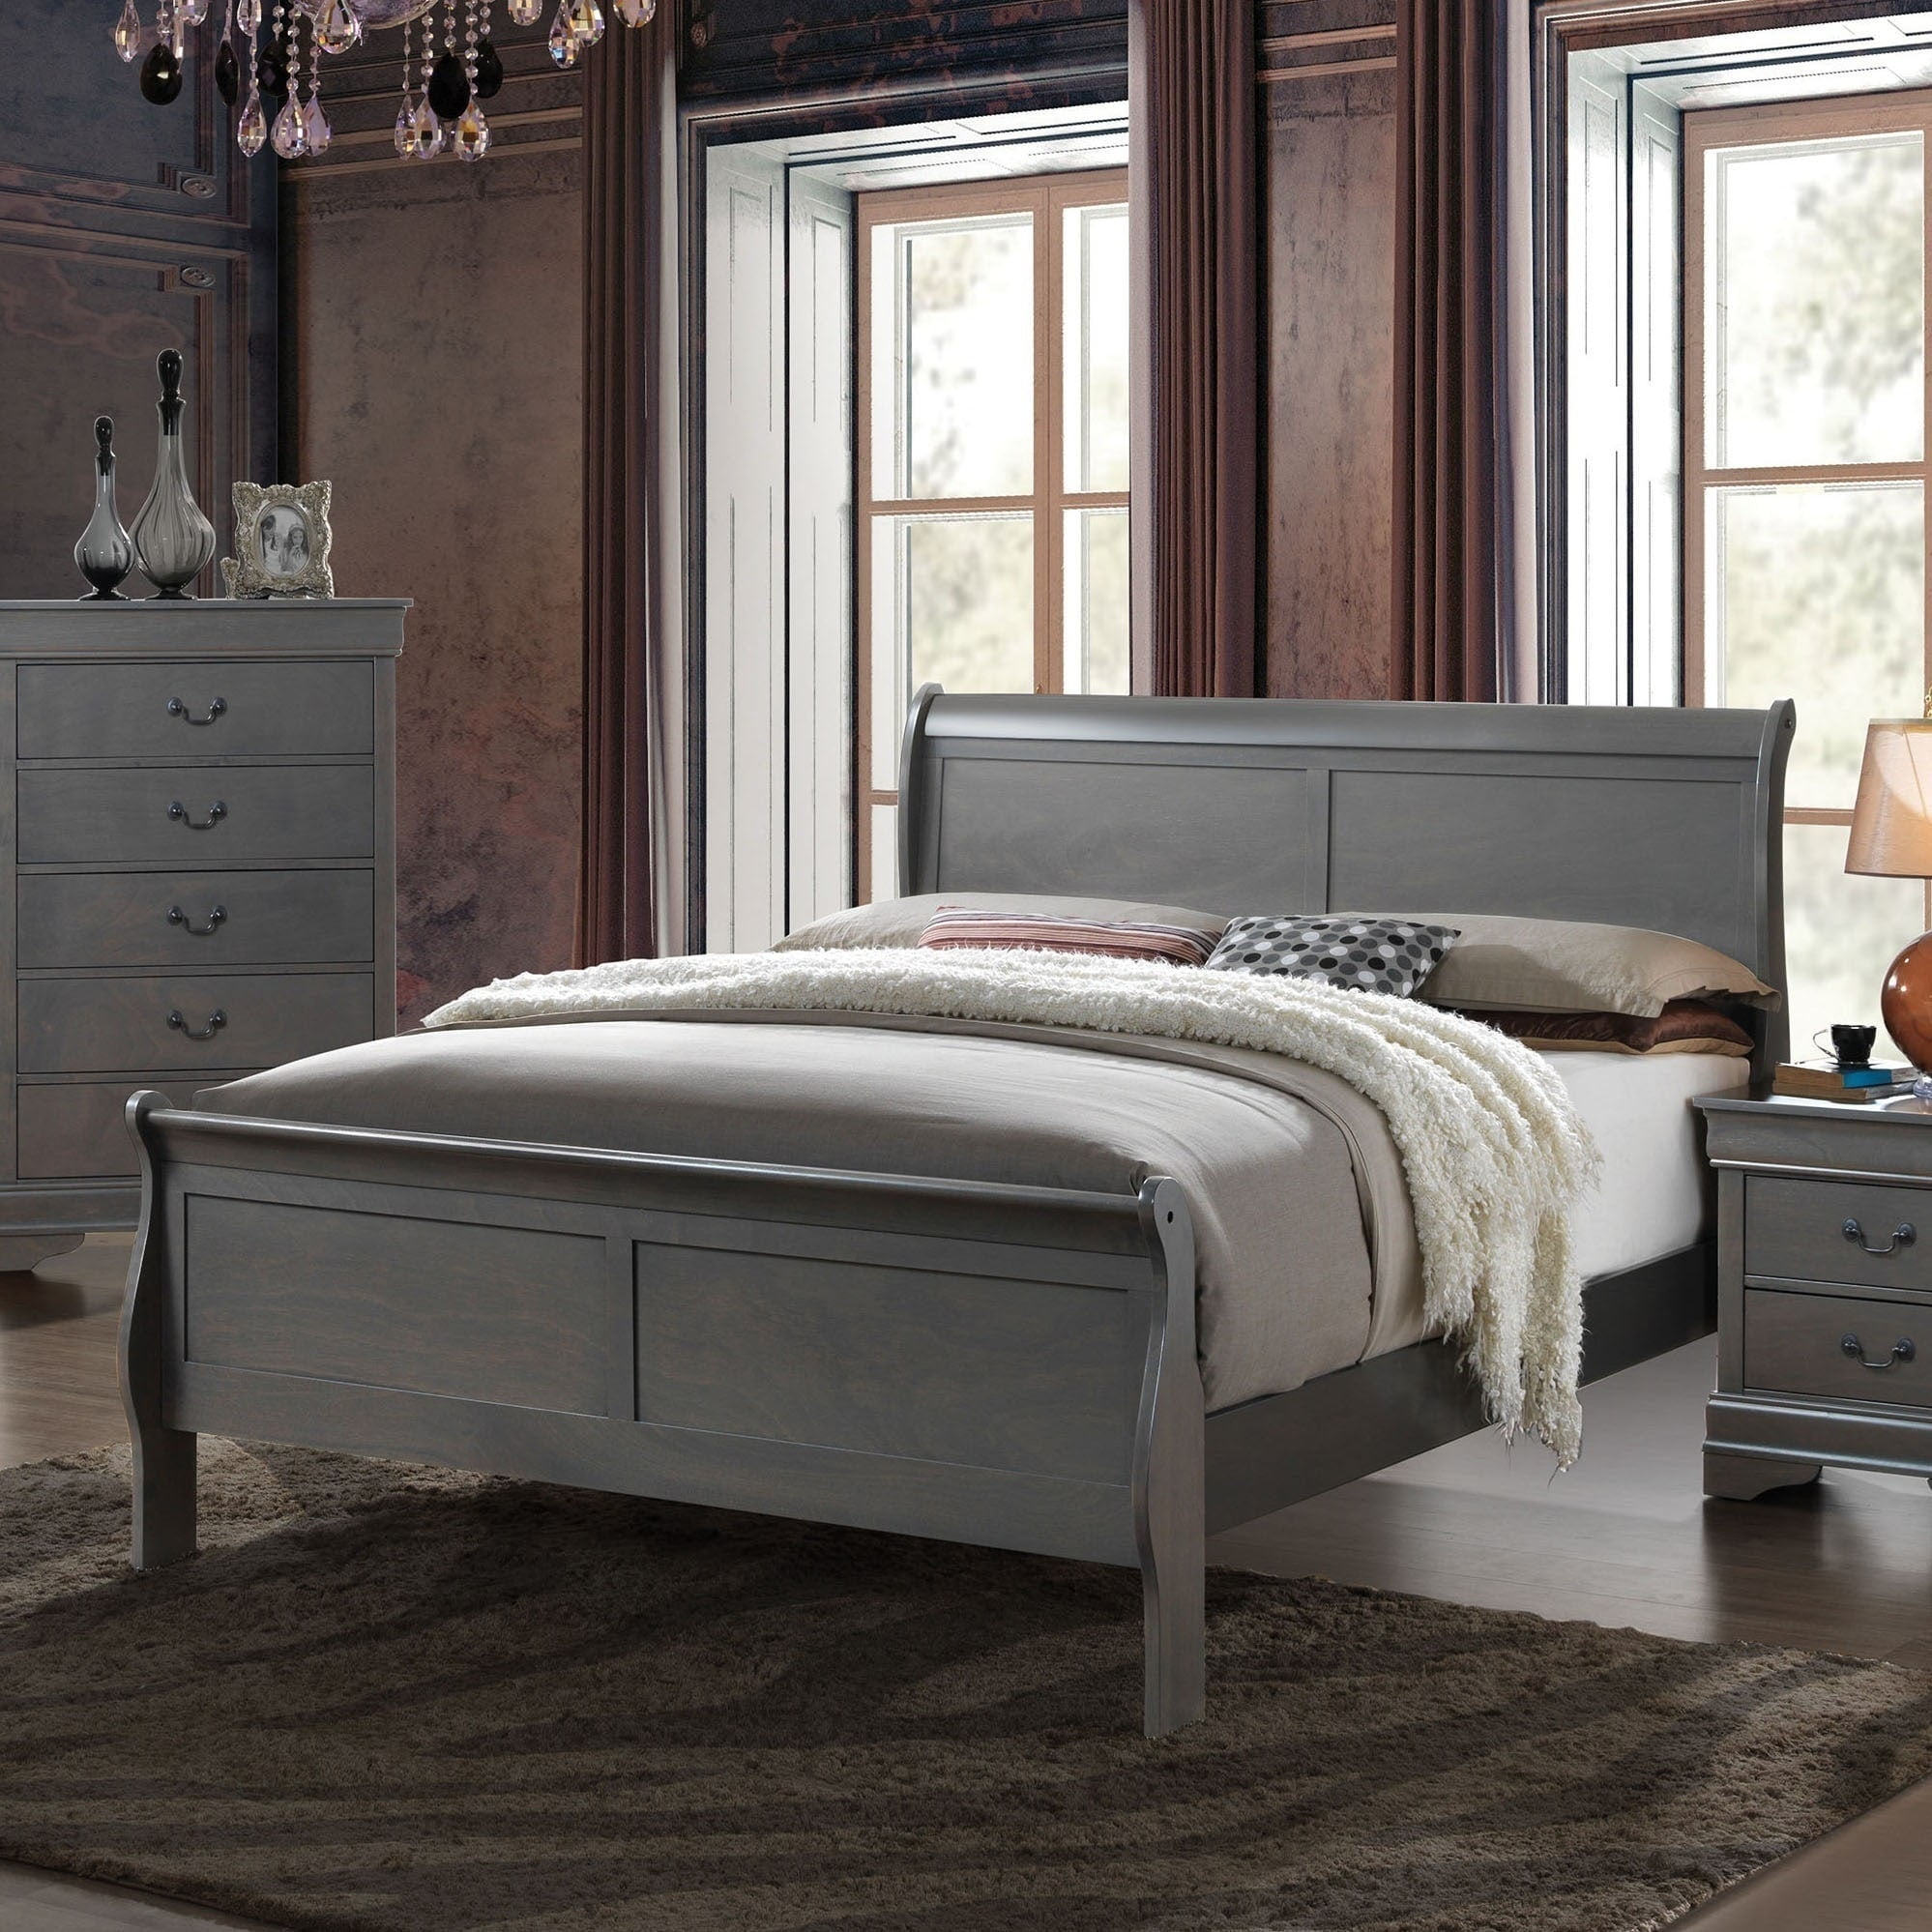 Furniture of America Devi Contemporary Grey Solid Wood Sleigh Bed  Walmart com  Walmart com